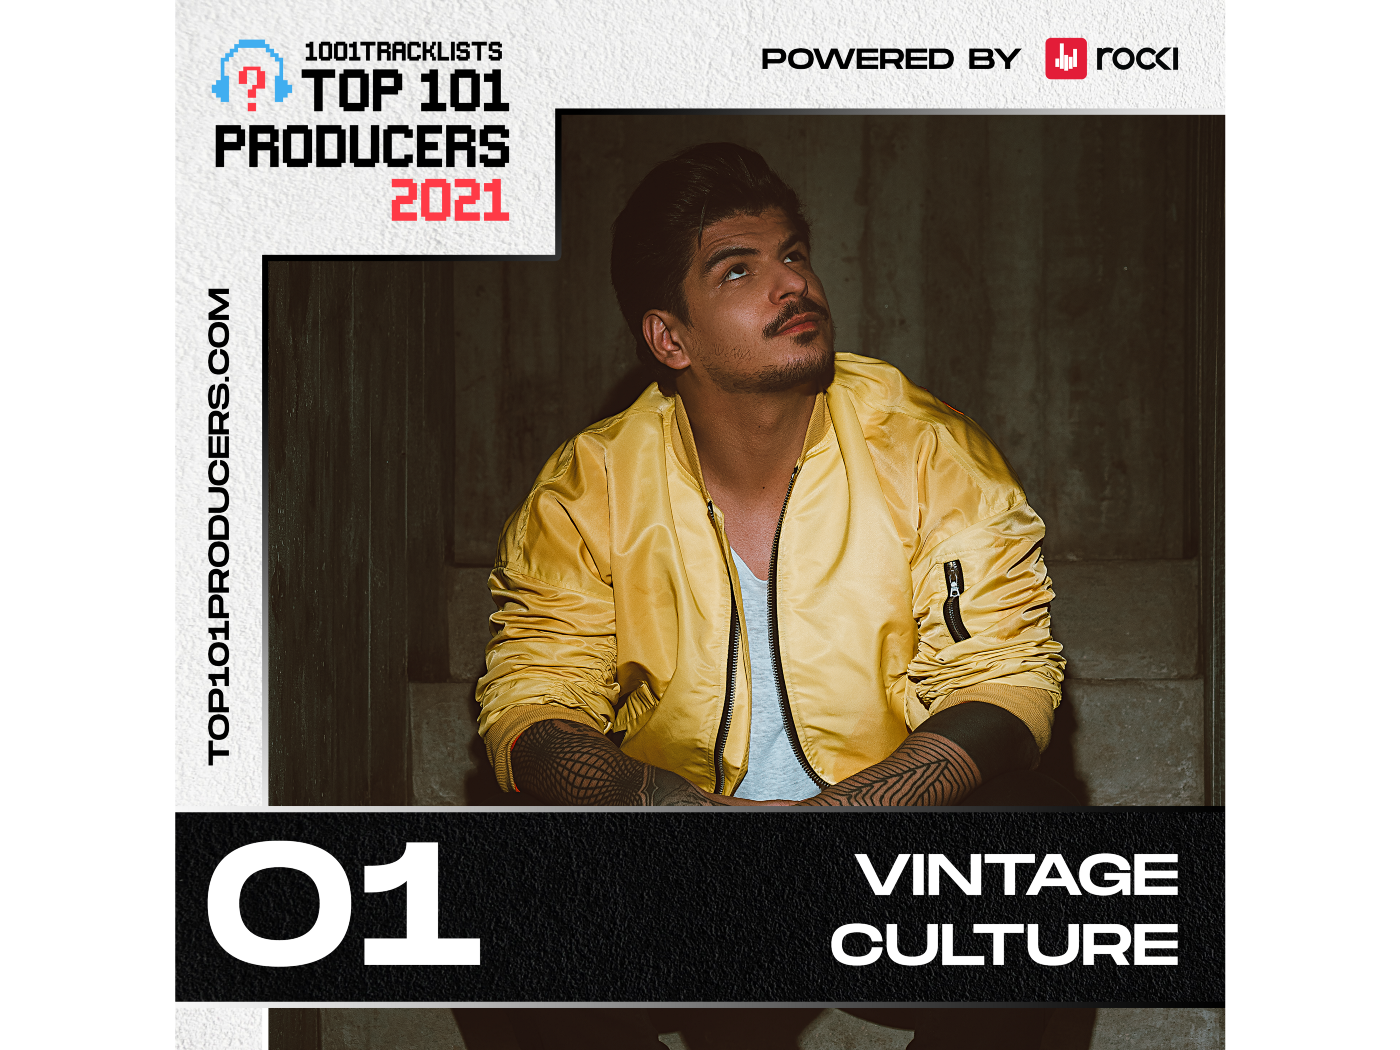 Top 101 Producers 2021 Winner: Vintage Culture